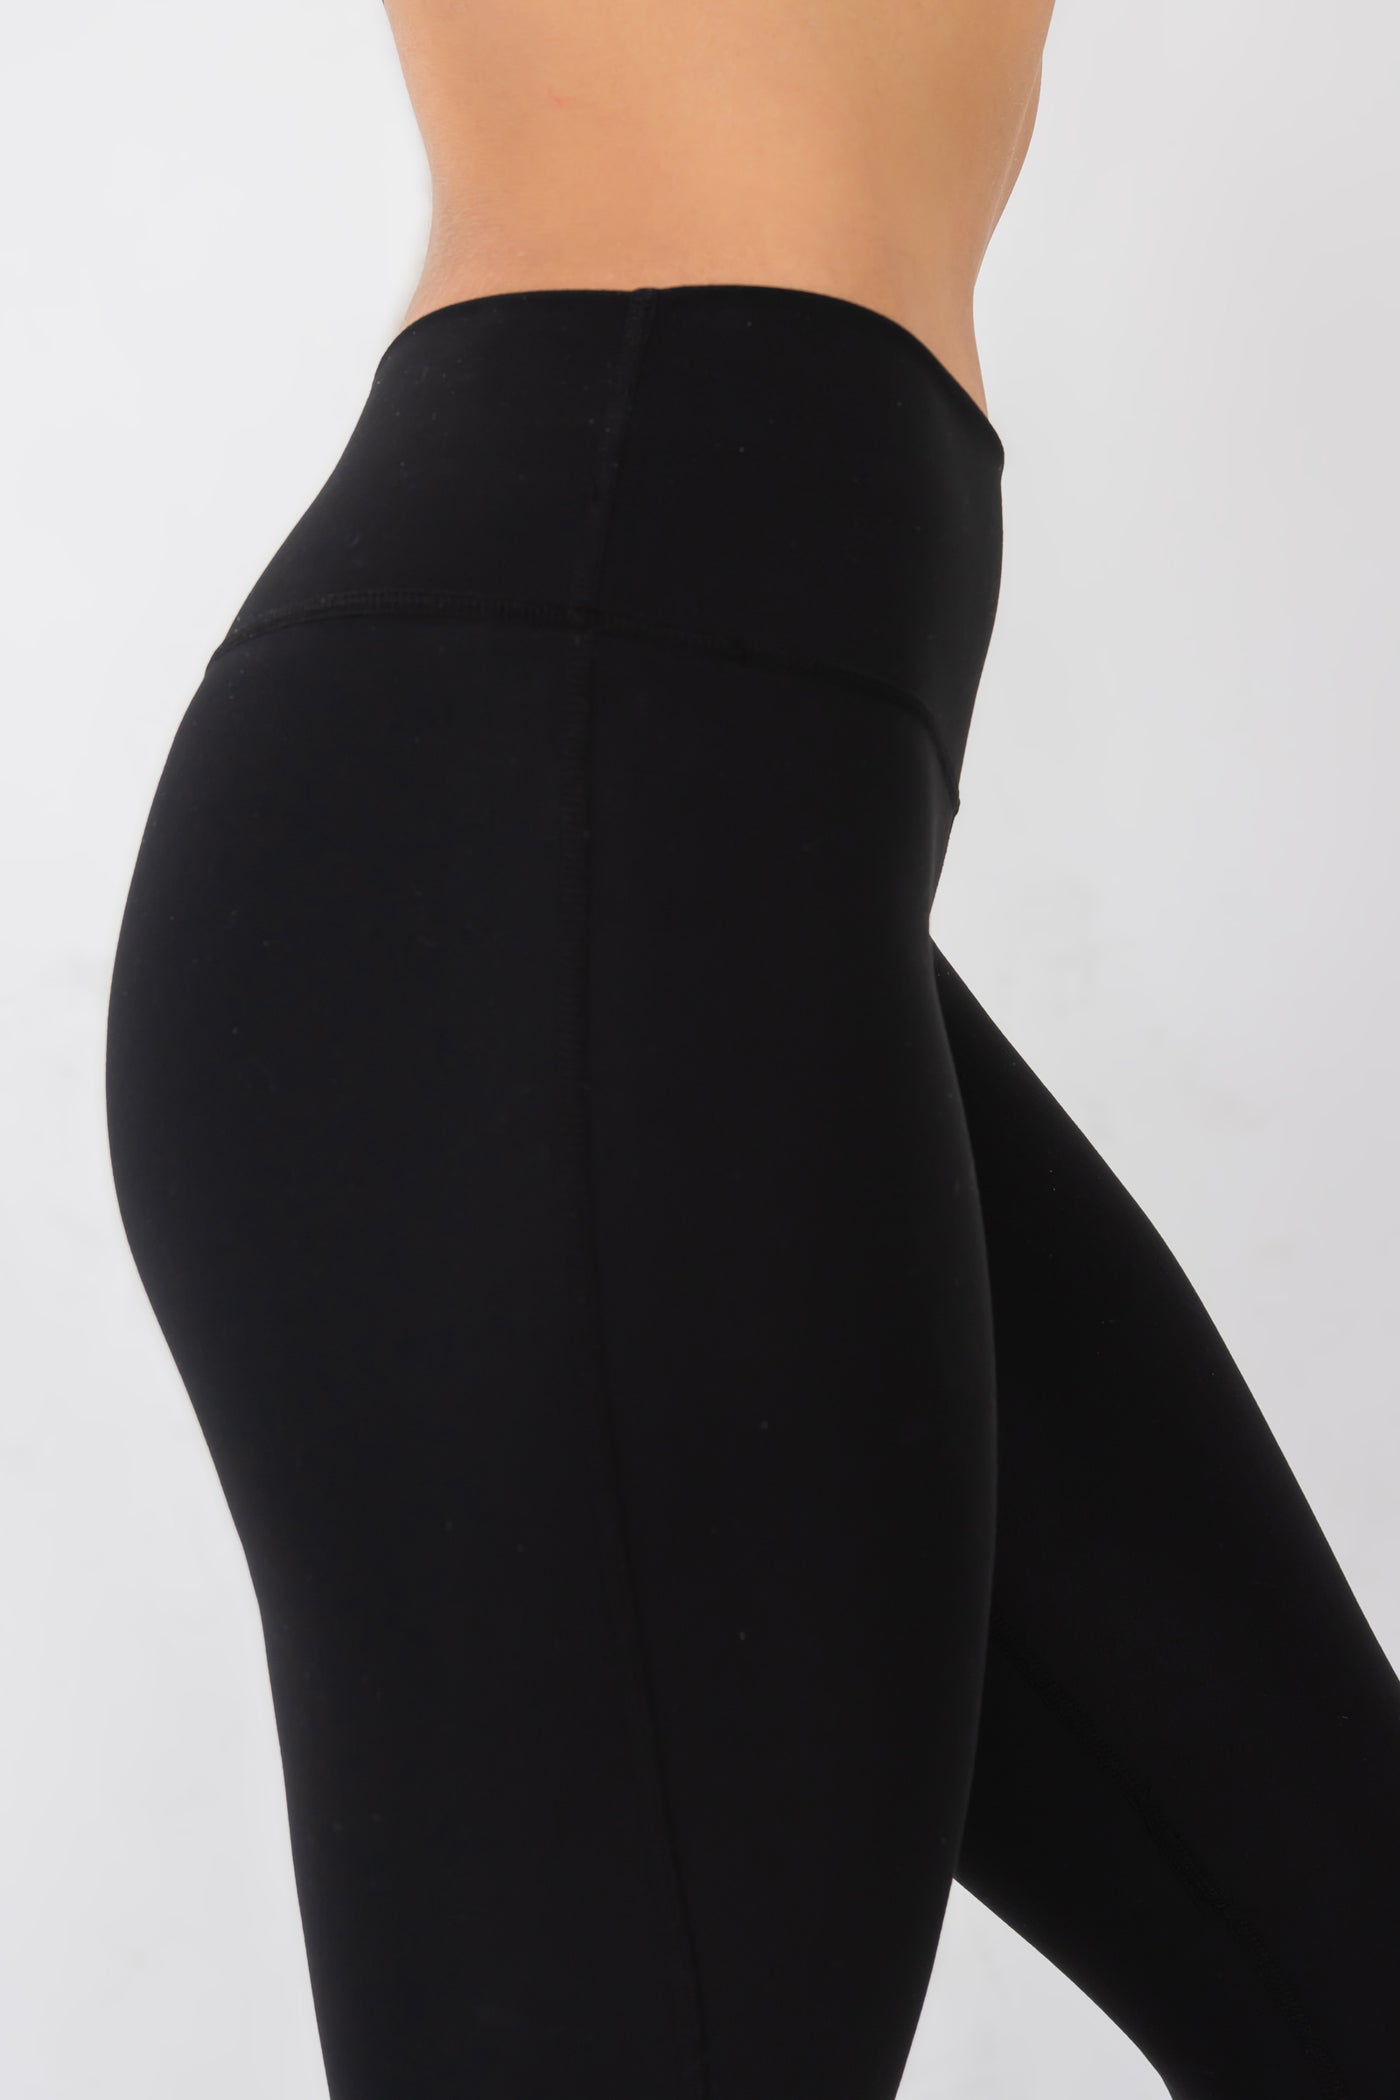 Legging luna black  Luna legging - black - anahata fitwear